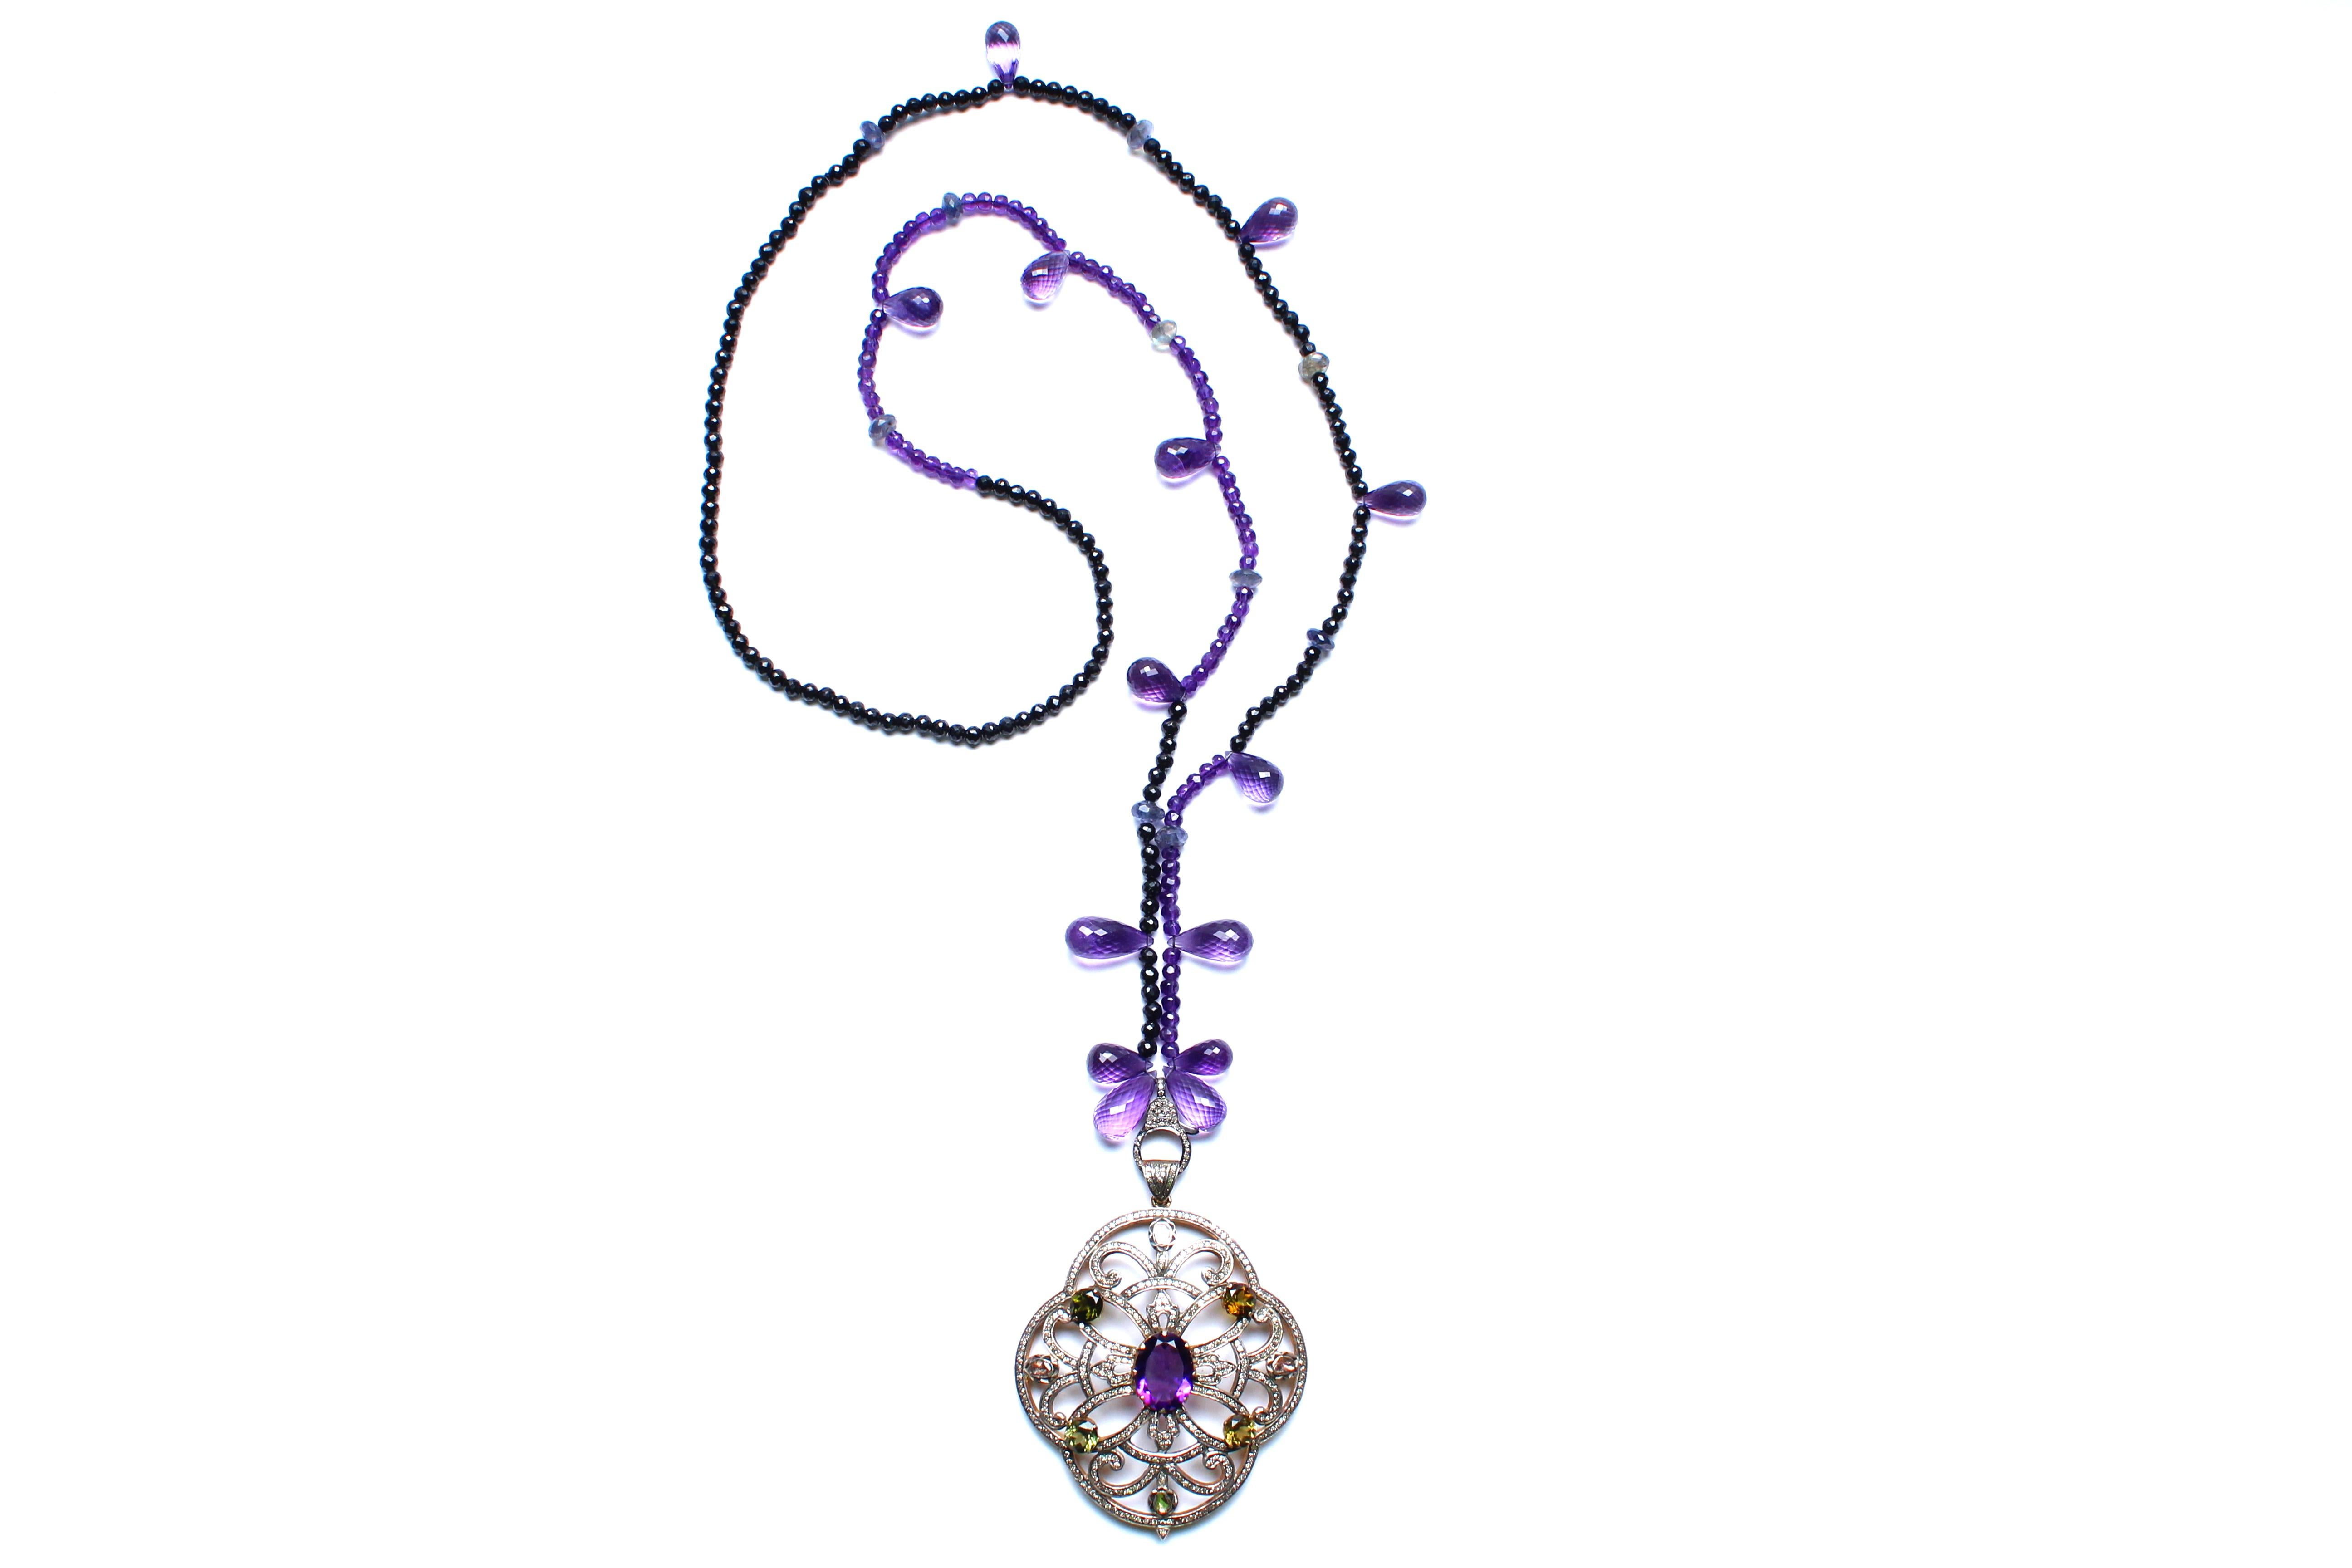 Contemporary Clarissa Bronfman Amethyst, Peridot, Diamond Beaded Pendant Necklace